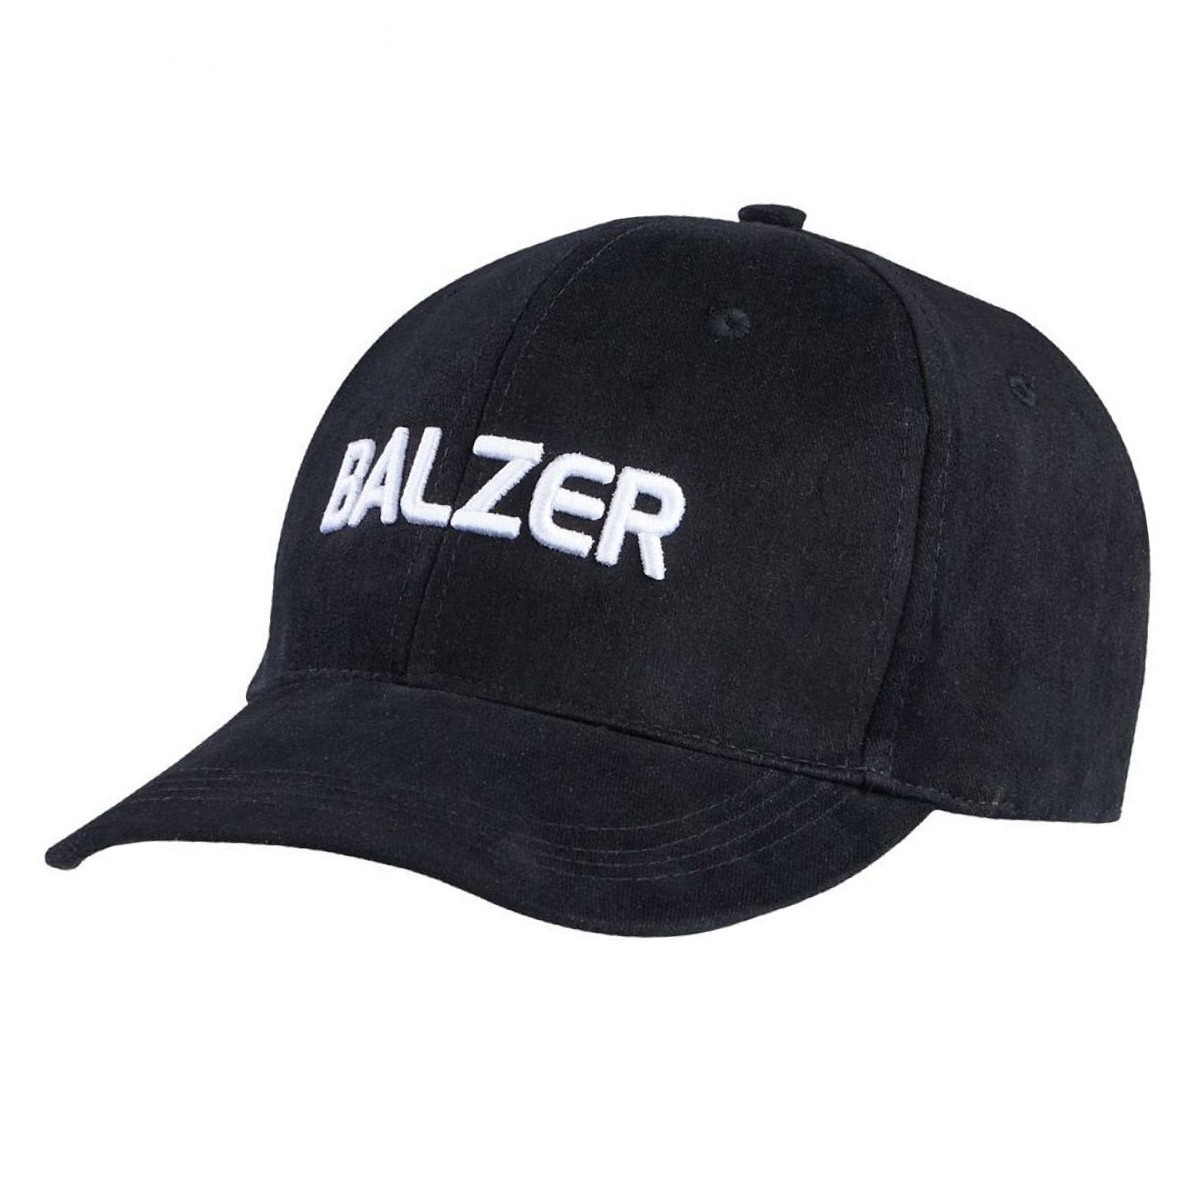 Balzer Basecap Black